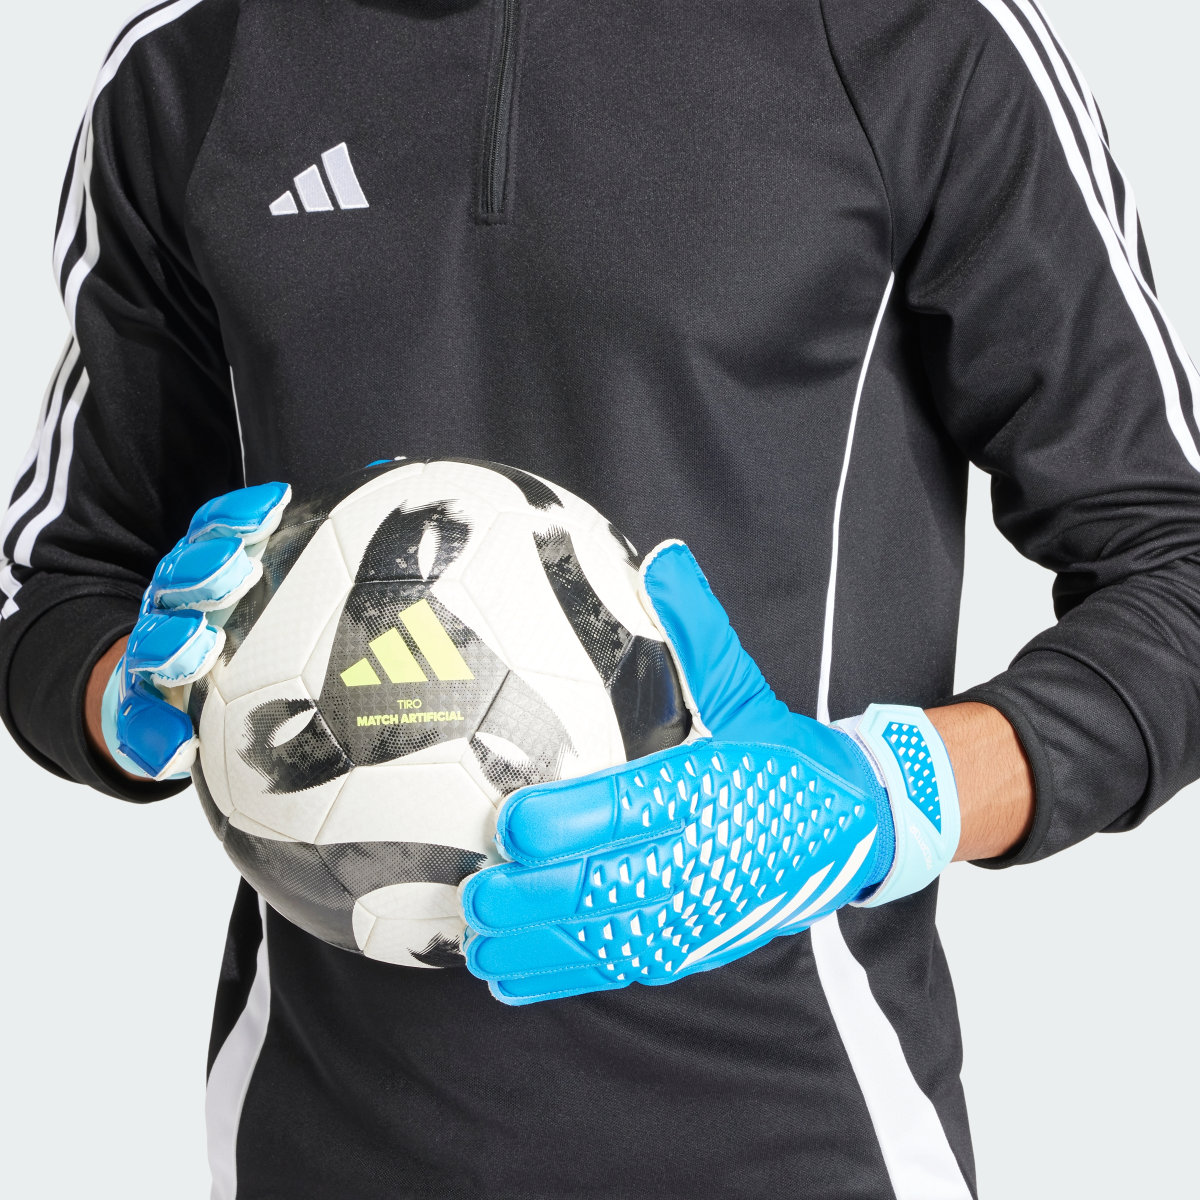 Adidas Predator Training Gloves. 6